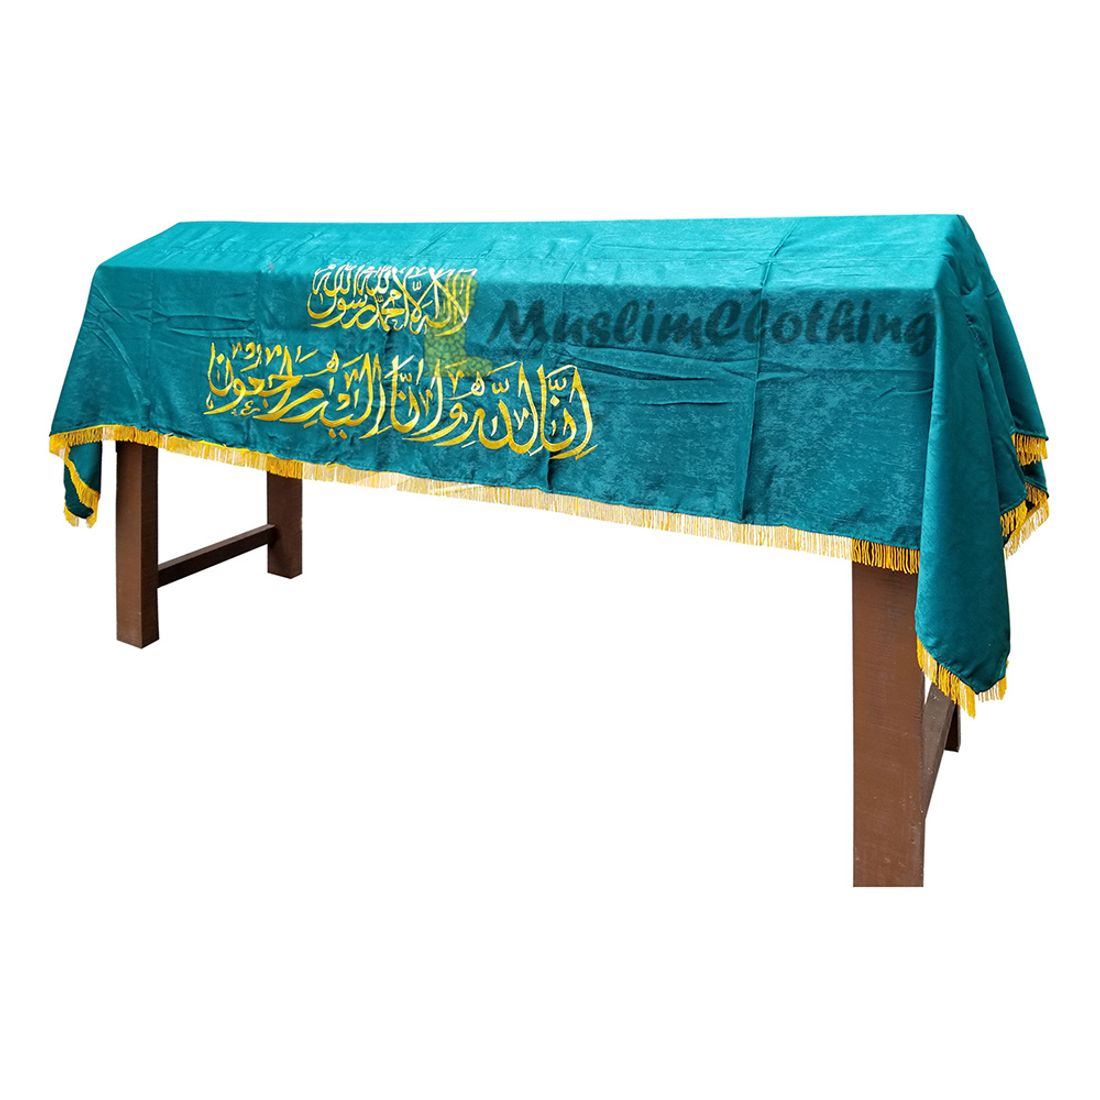 Medium-weight Velvet Burial Coffin Chadar Casket Cover Islamic Janazah Cloth Green Gold